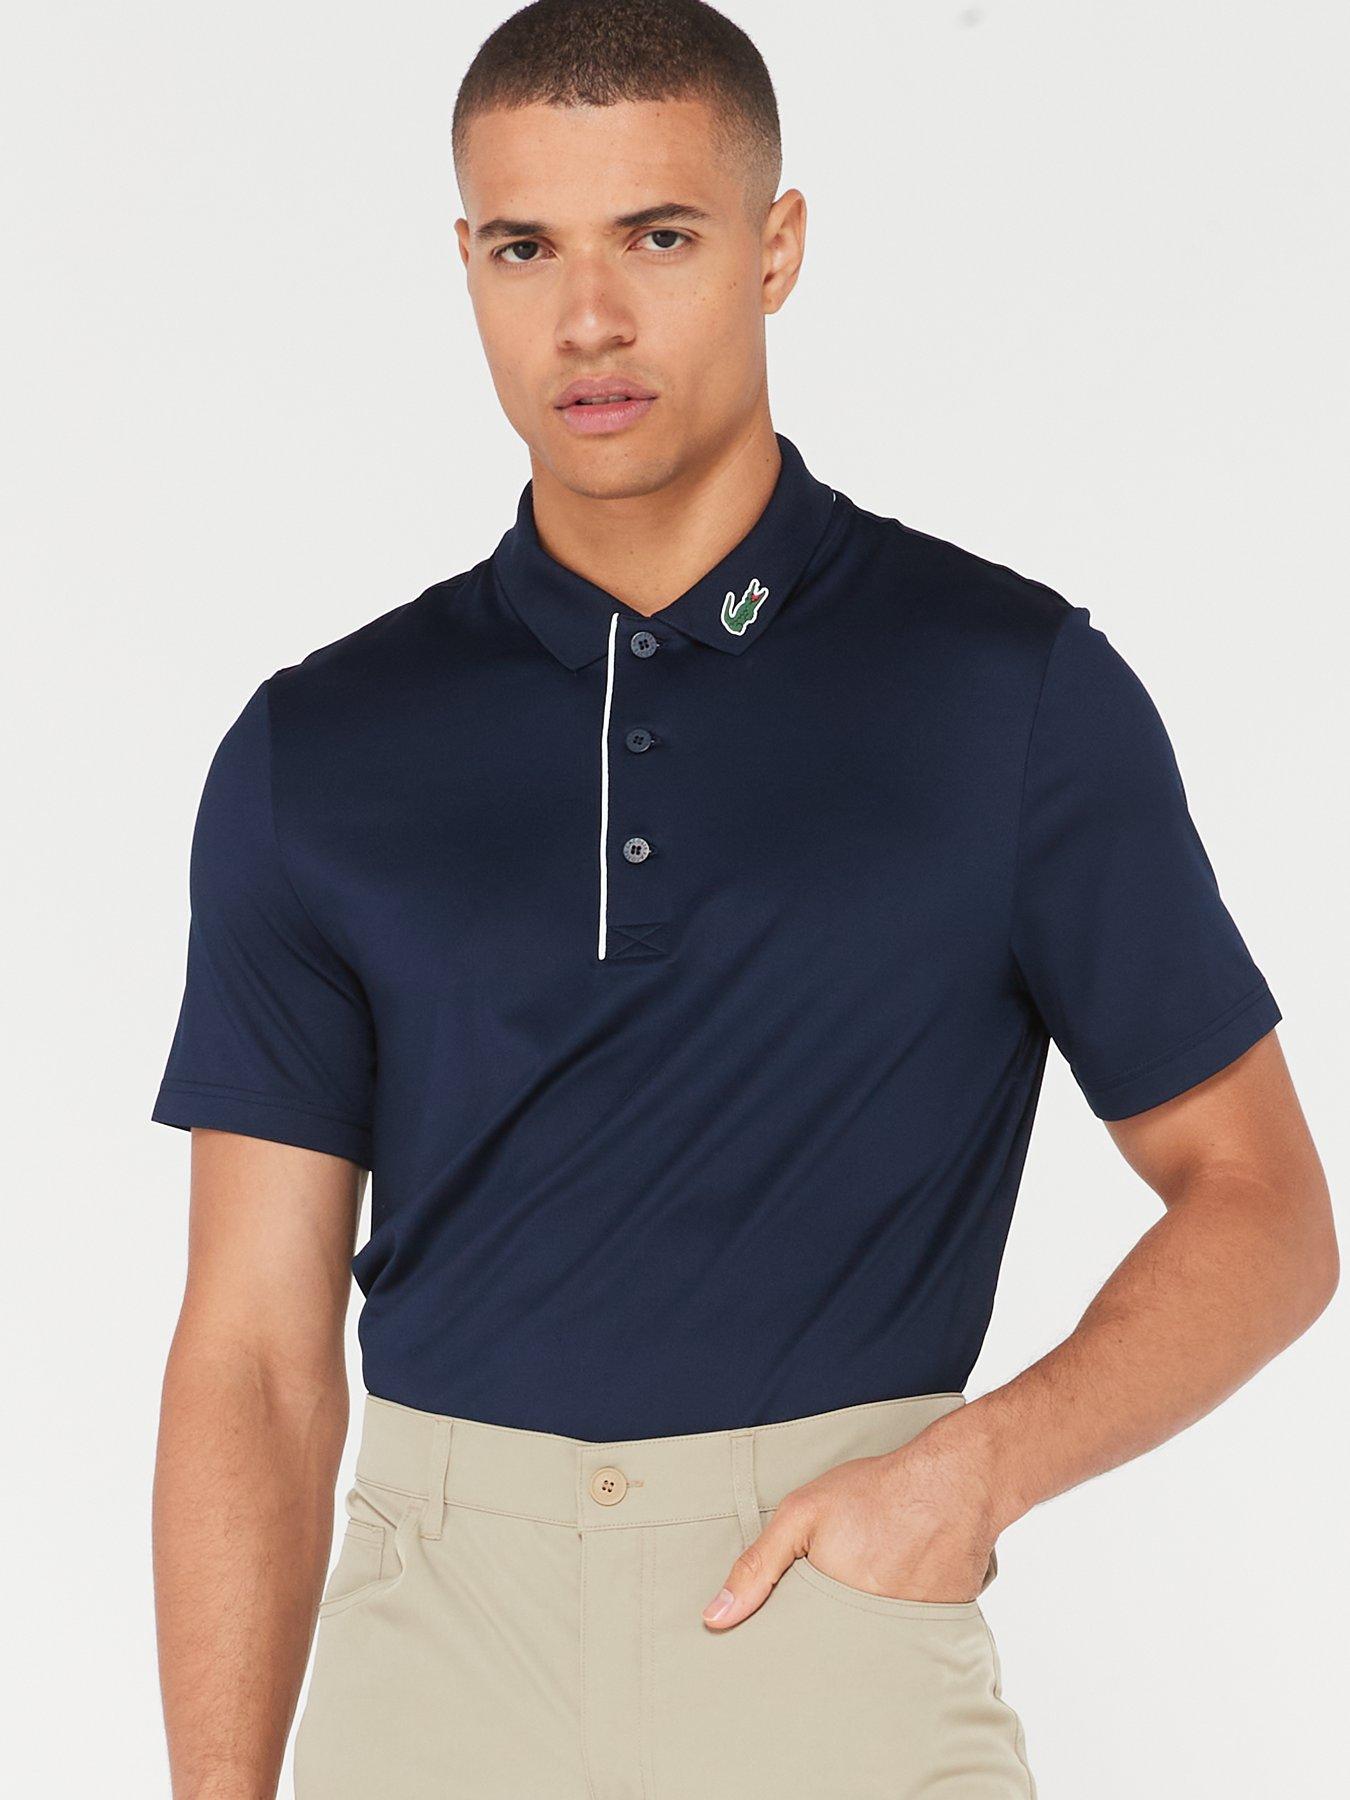 Lacoste Golf Technical Polo Shirt - Dark Blue, Dark Blue, Size M, Men